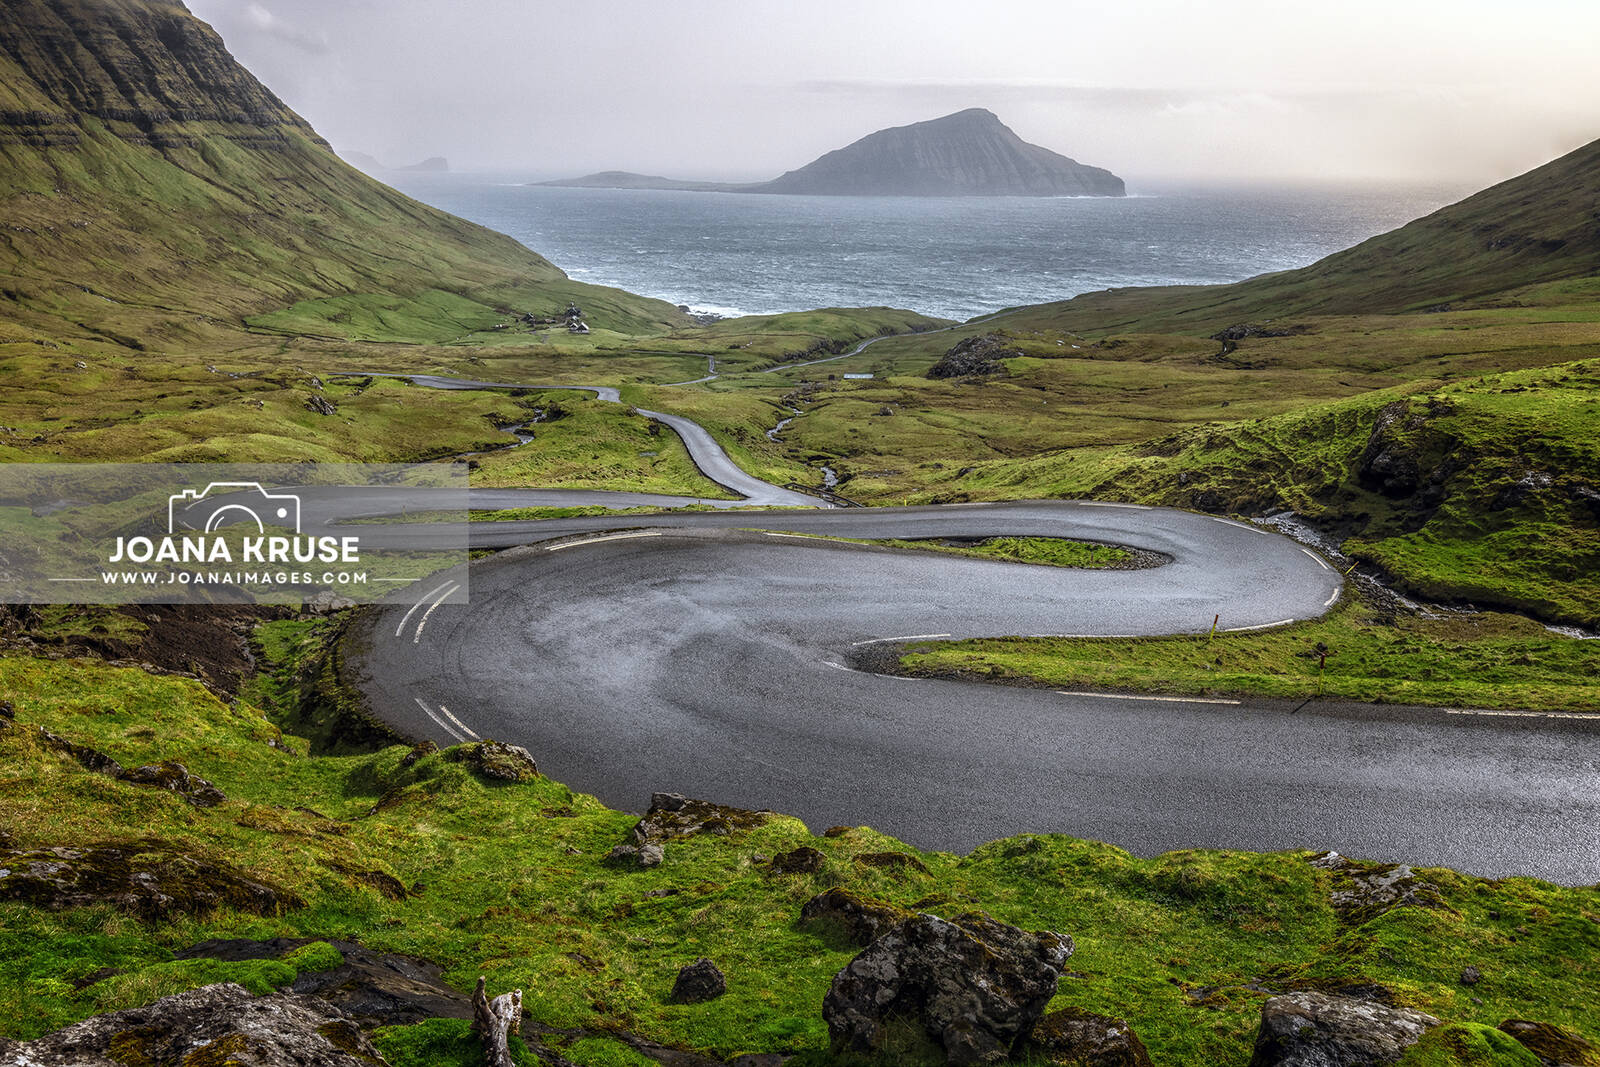 Image of Road to Norðradalur village by Joana Kruse